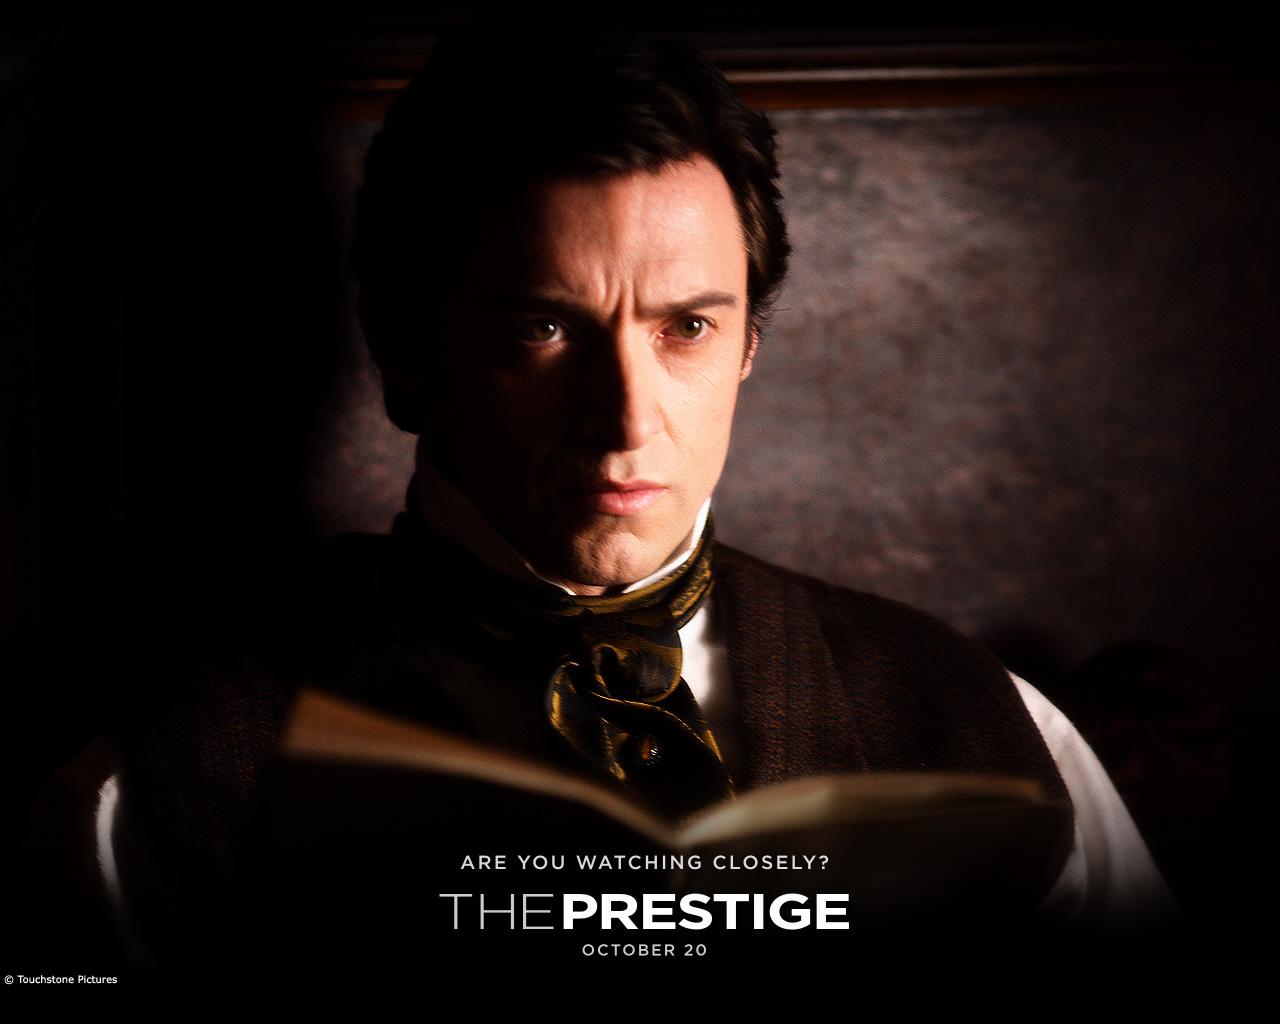 Hugh Jackman Jackman in The Prestige Wallpaper 2 800x600